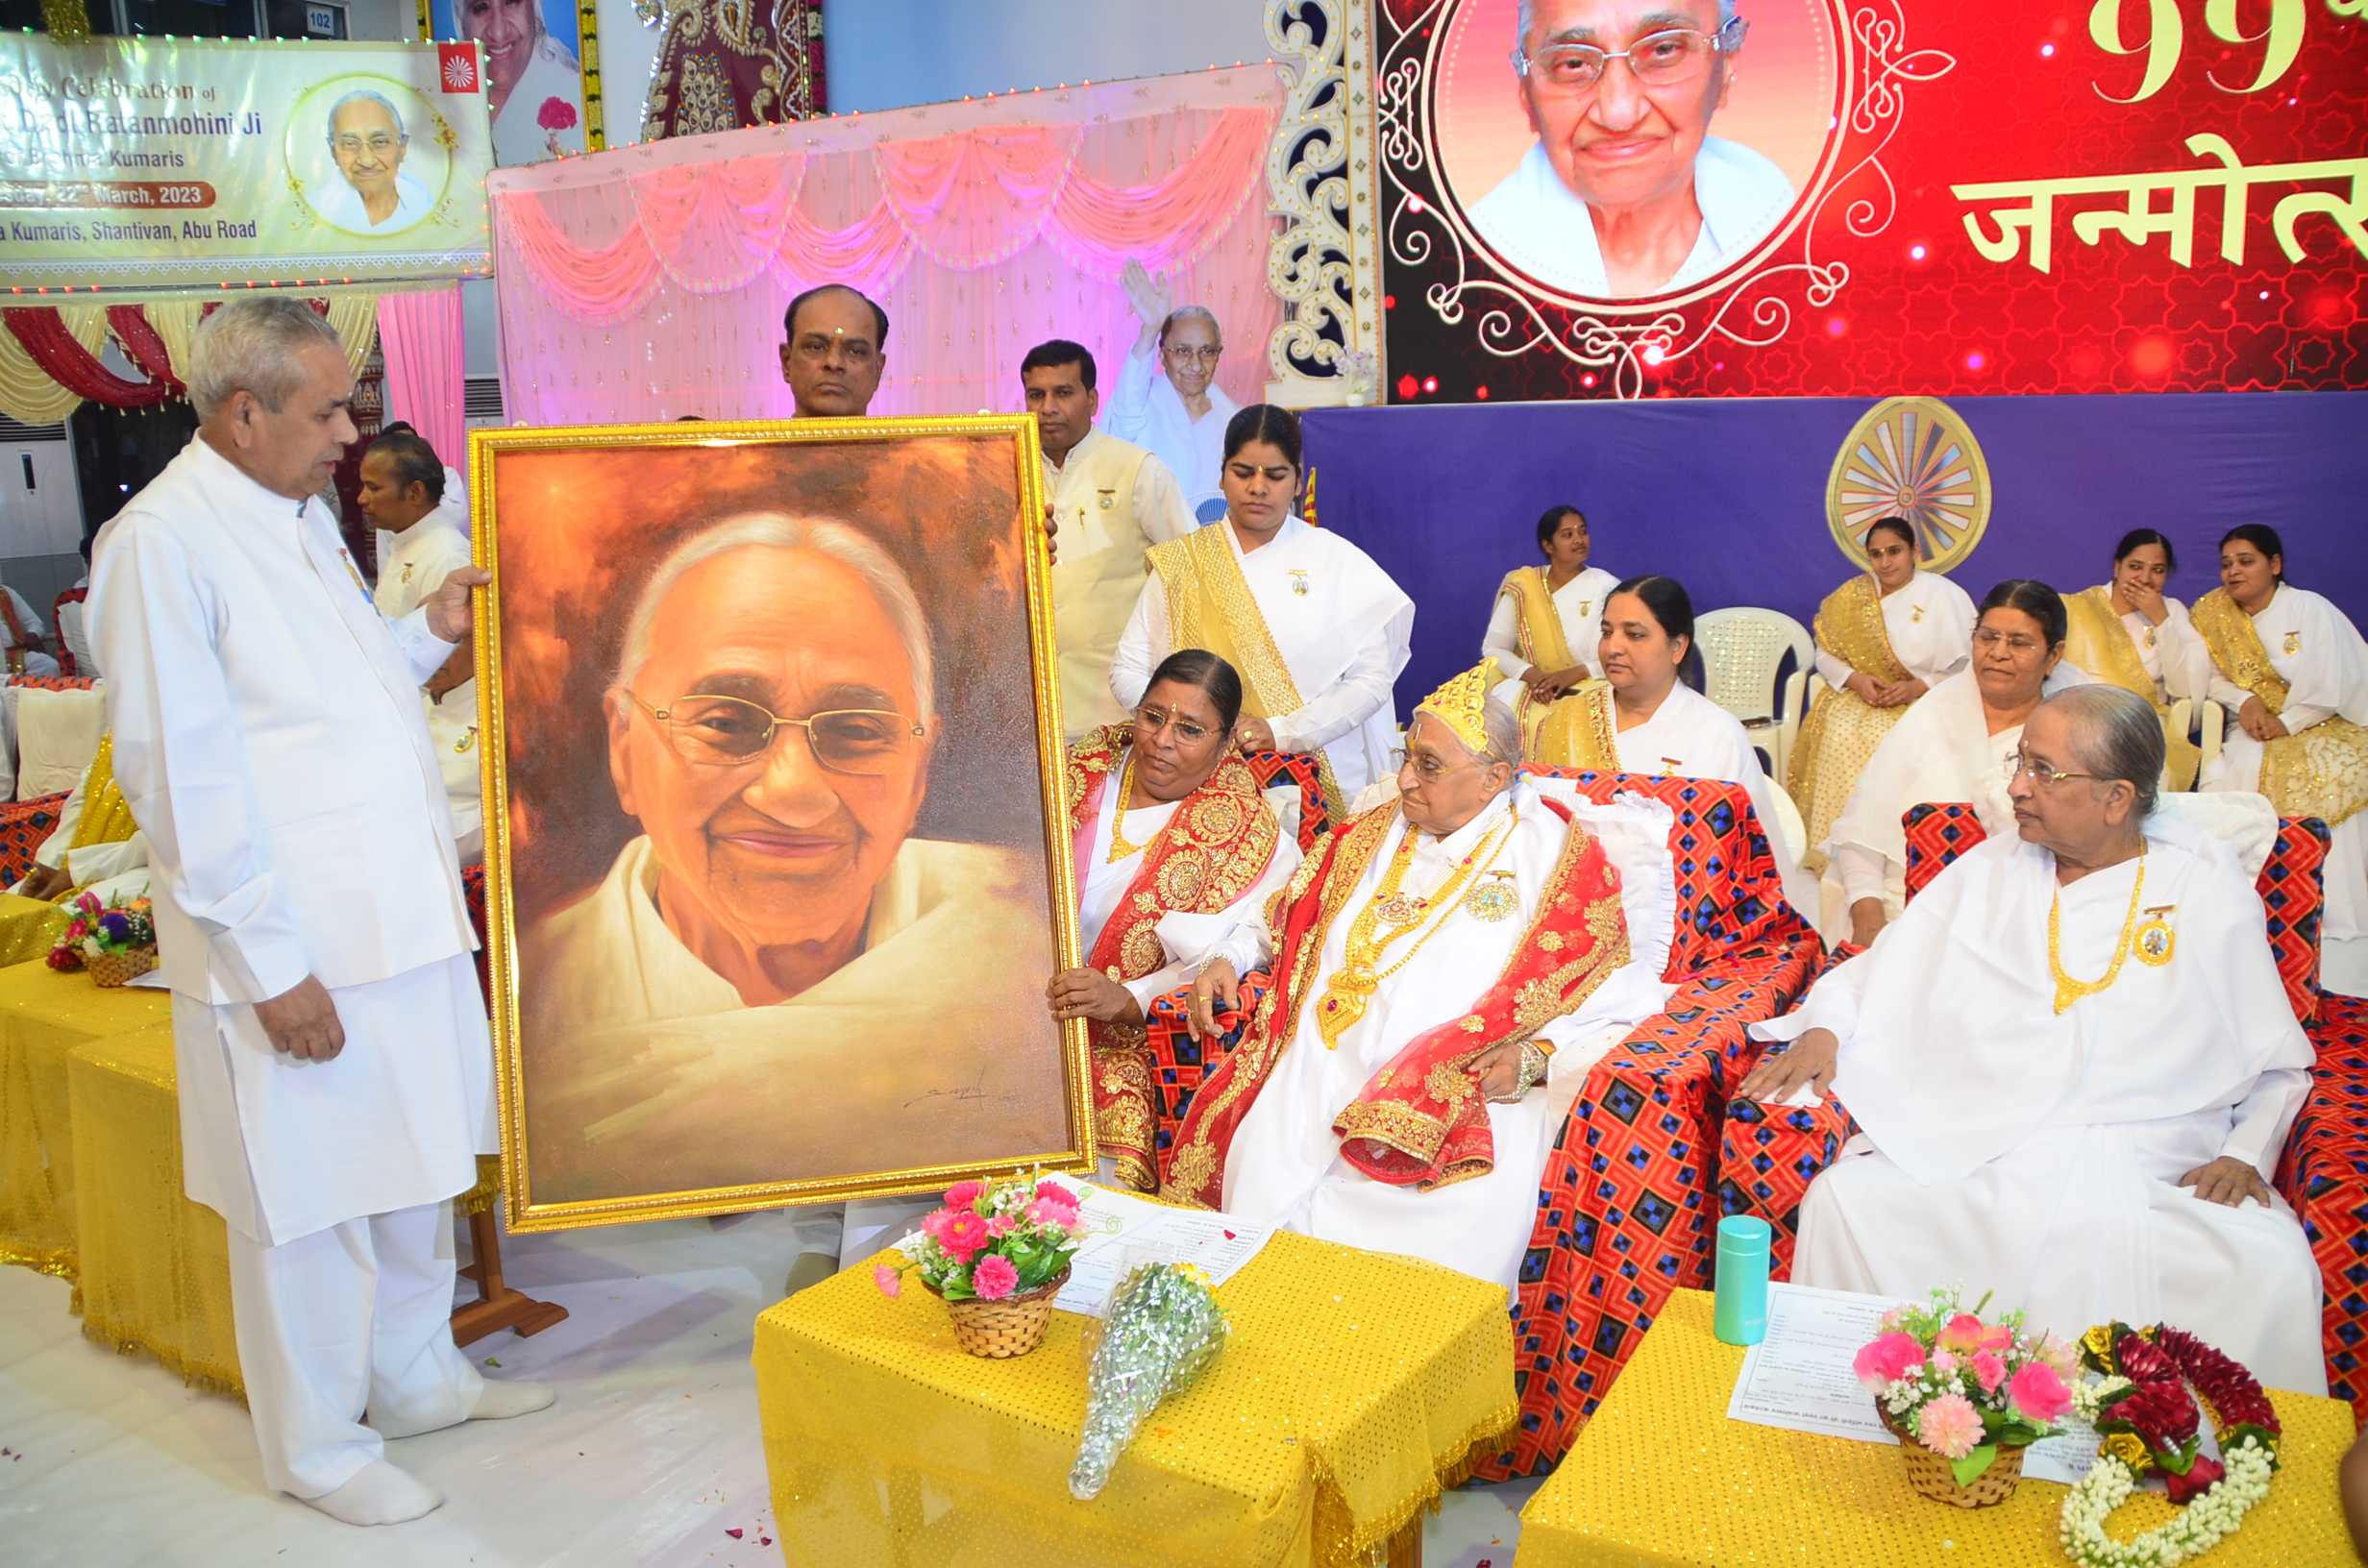 99th Birthday Celebrations of Dadi Ratanmohini, Chief of Brahma Kumaris